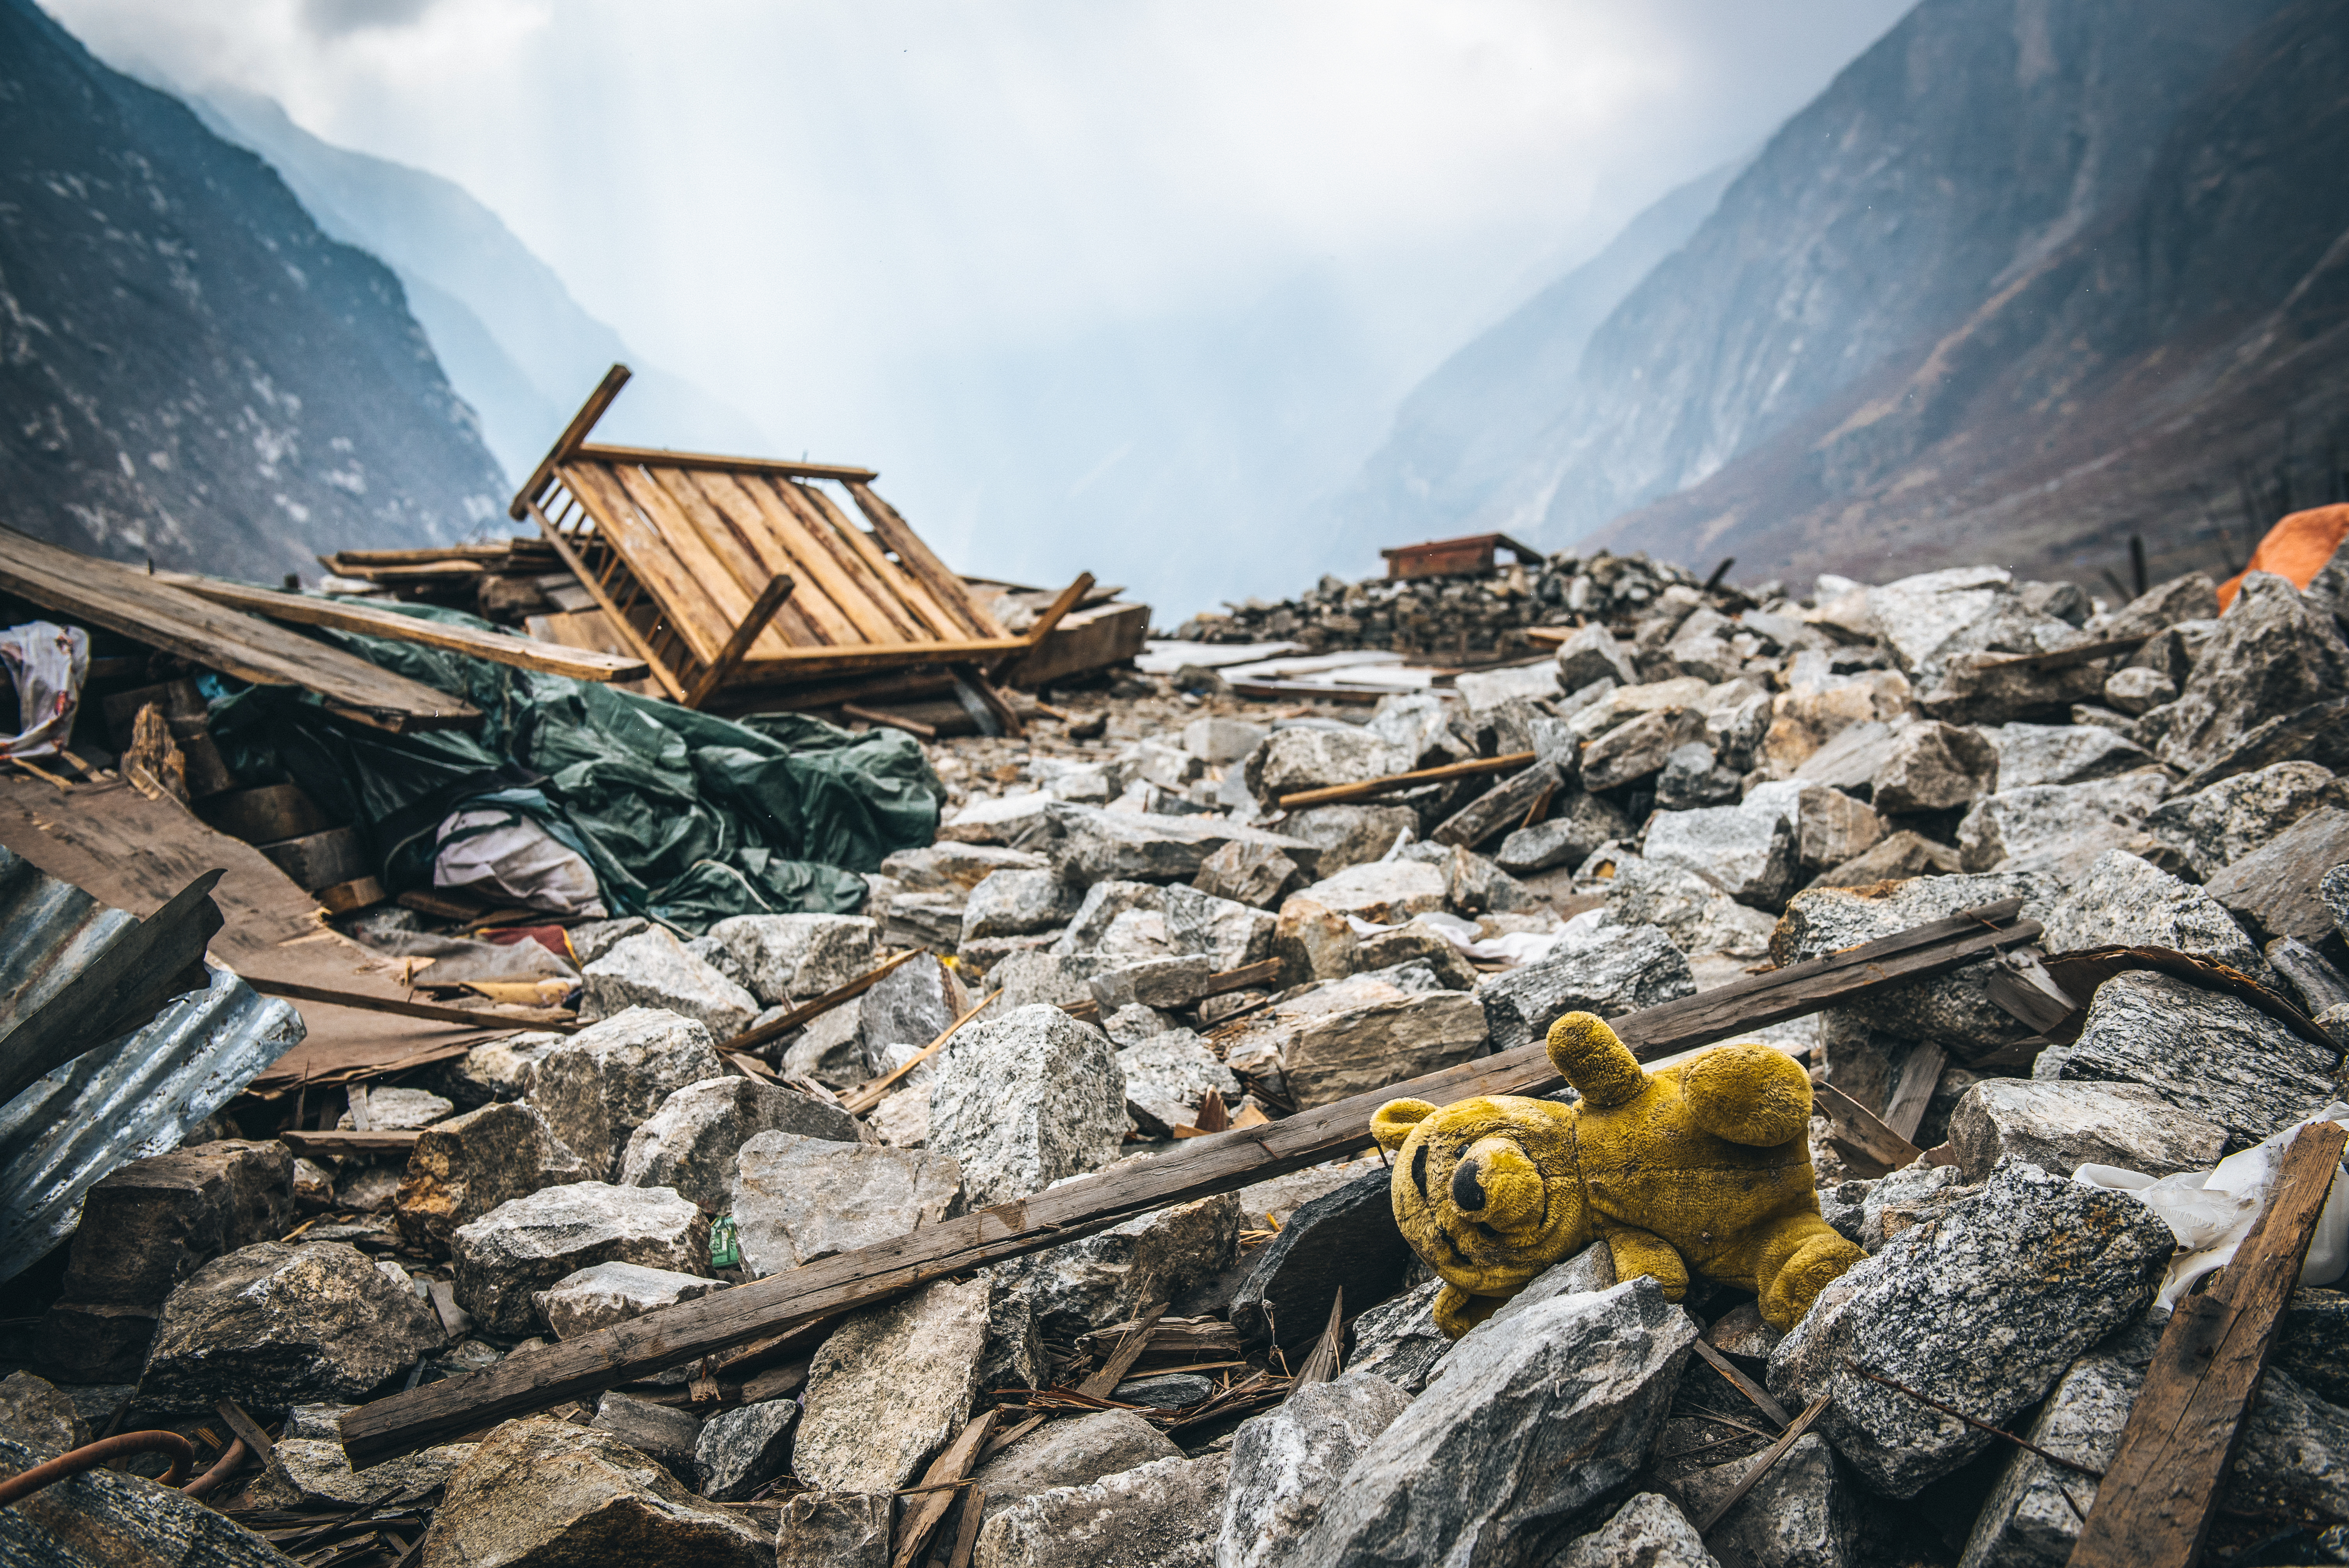 Winnie the pooh sits amongst earthquake devastation - Langtang Valley.